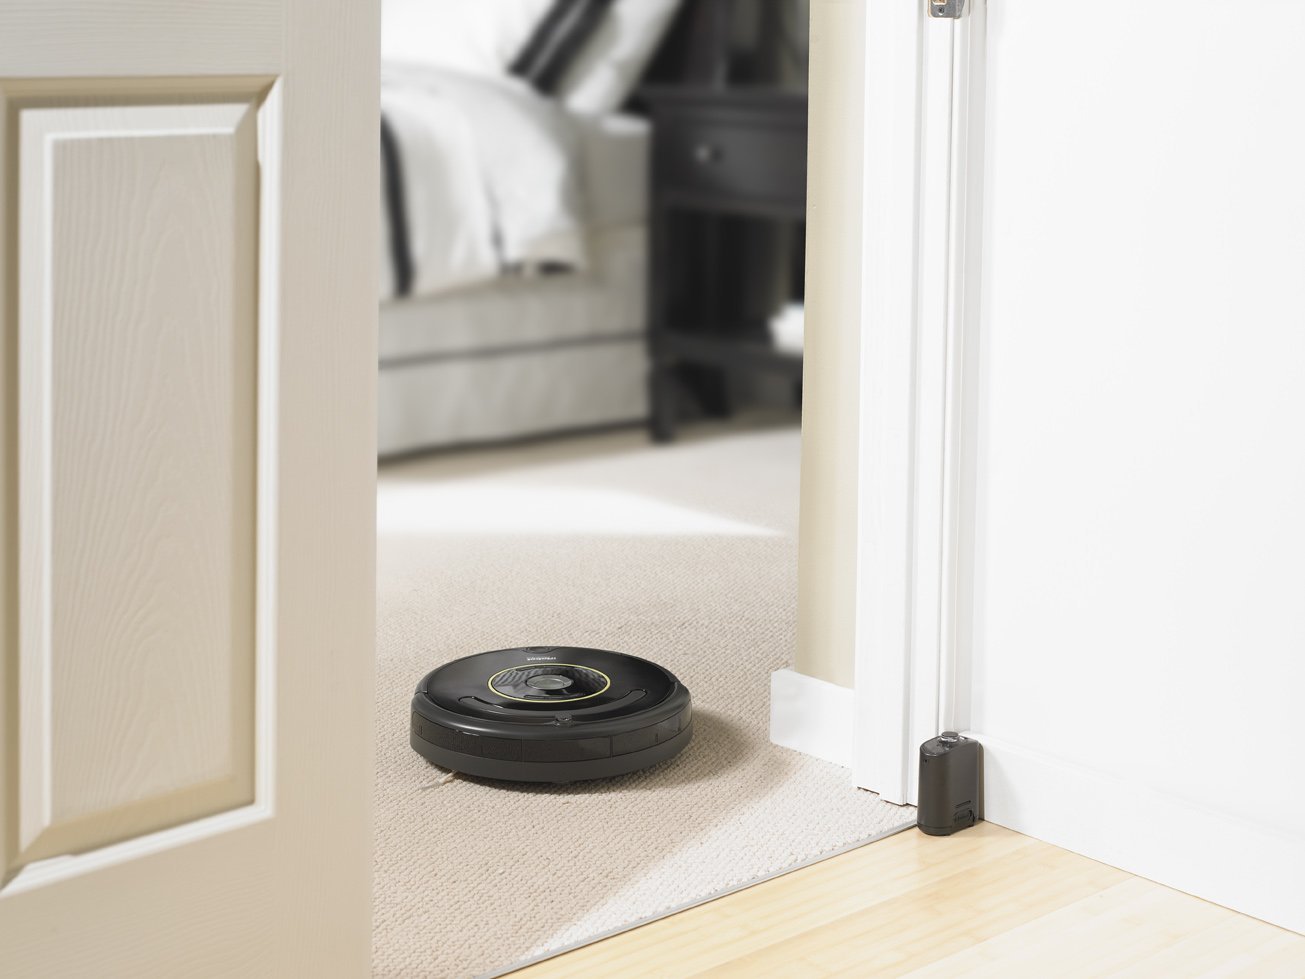 iRobot Roomba 650 自動吸塵機械人 抵買推介+直送香港/澳門